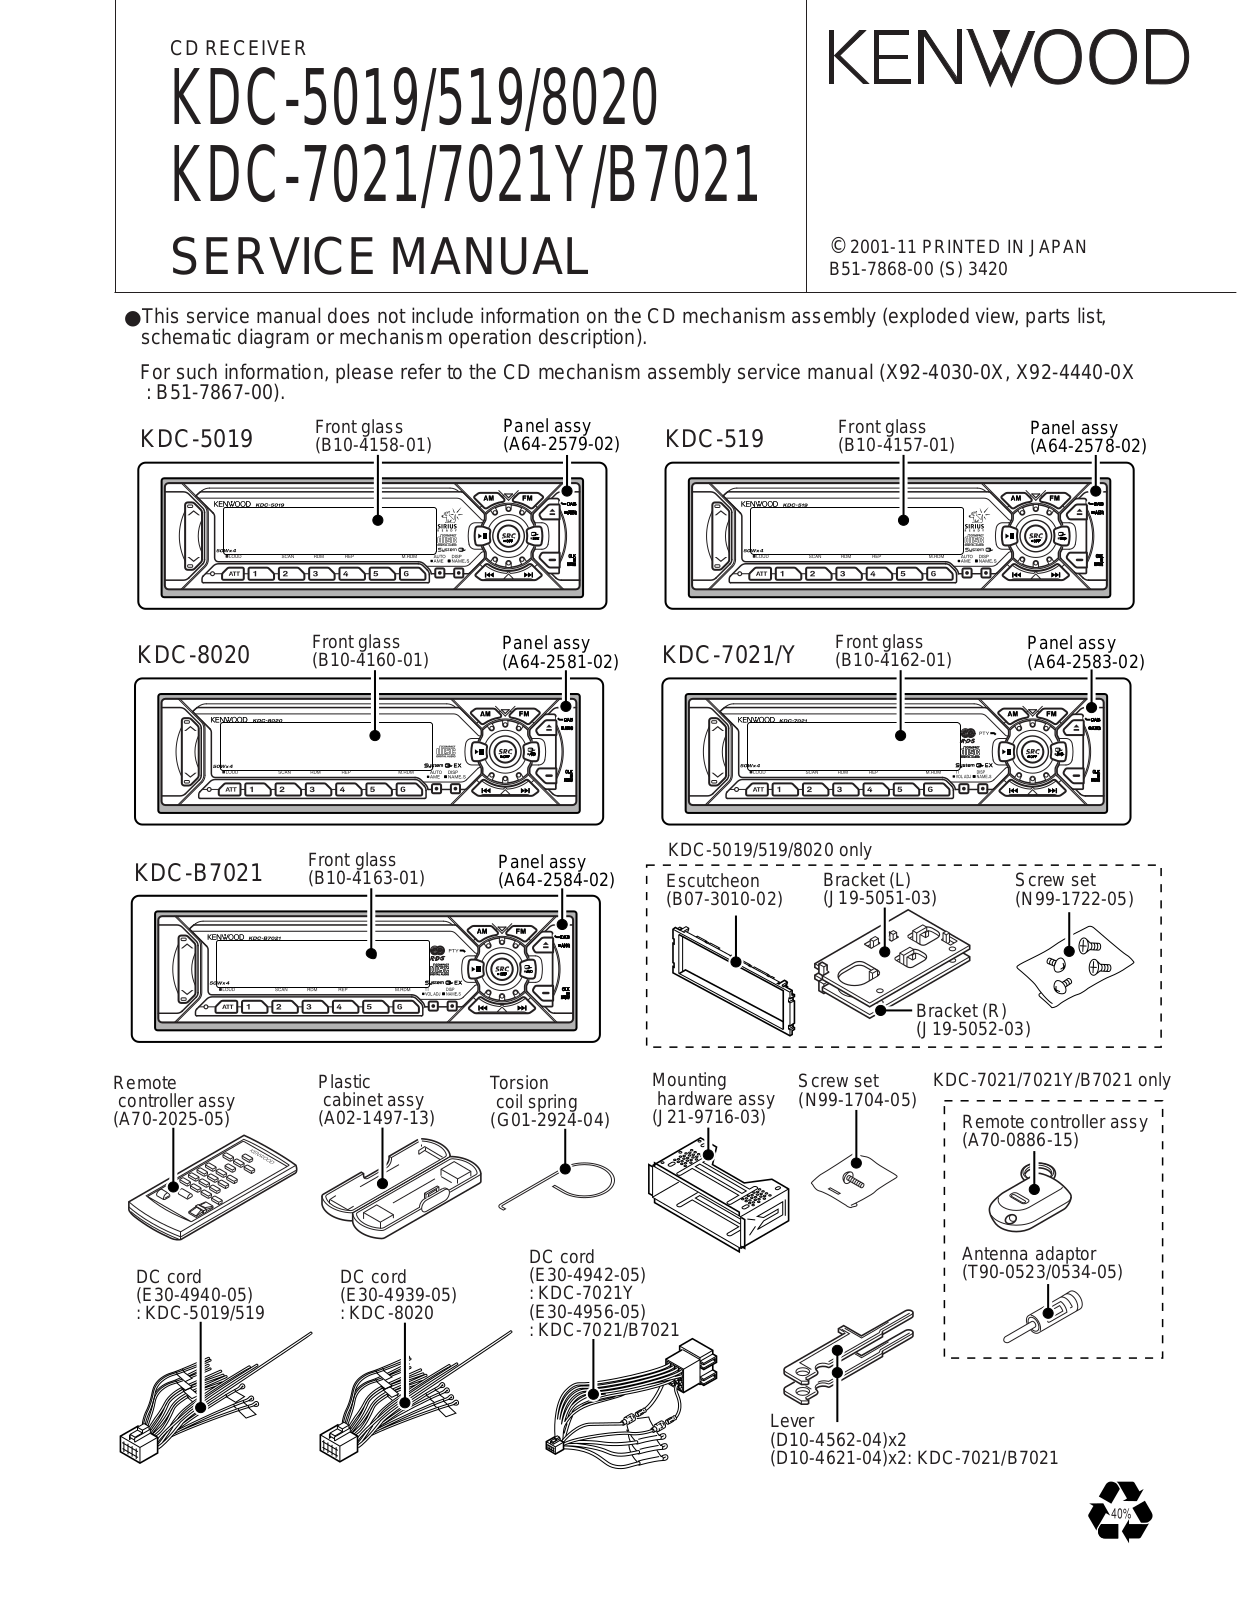 KENWOOD KDC-5019, KDC-7021Y, KDC-B7021 Service Manual